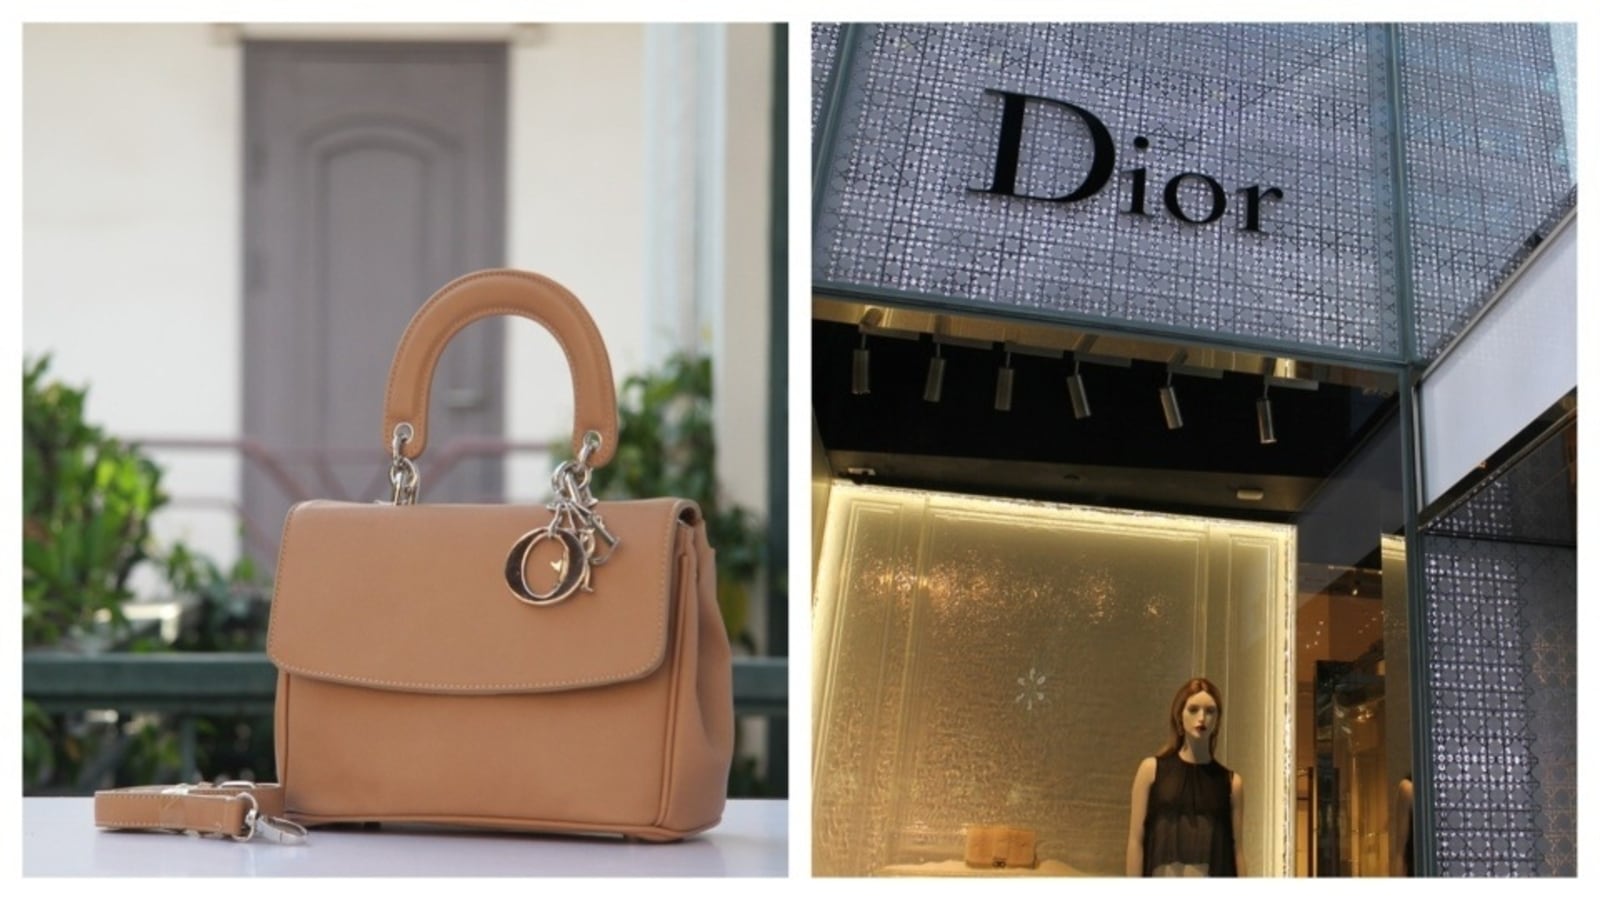 Dior's $2800 bag costs just $57 to make — new investigation reveals luxury brand's shocking secrets